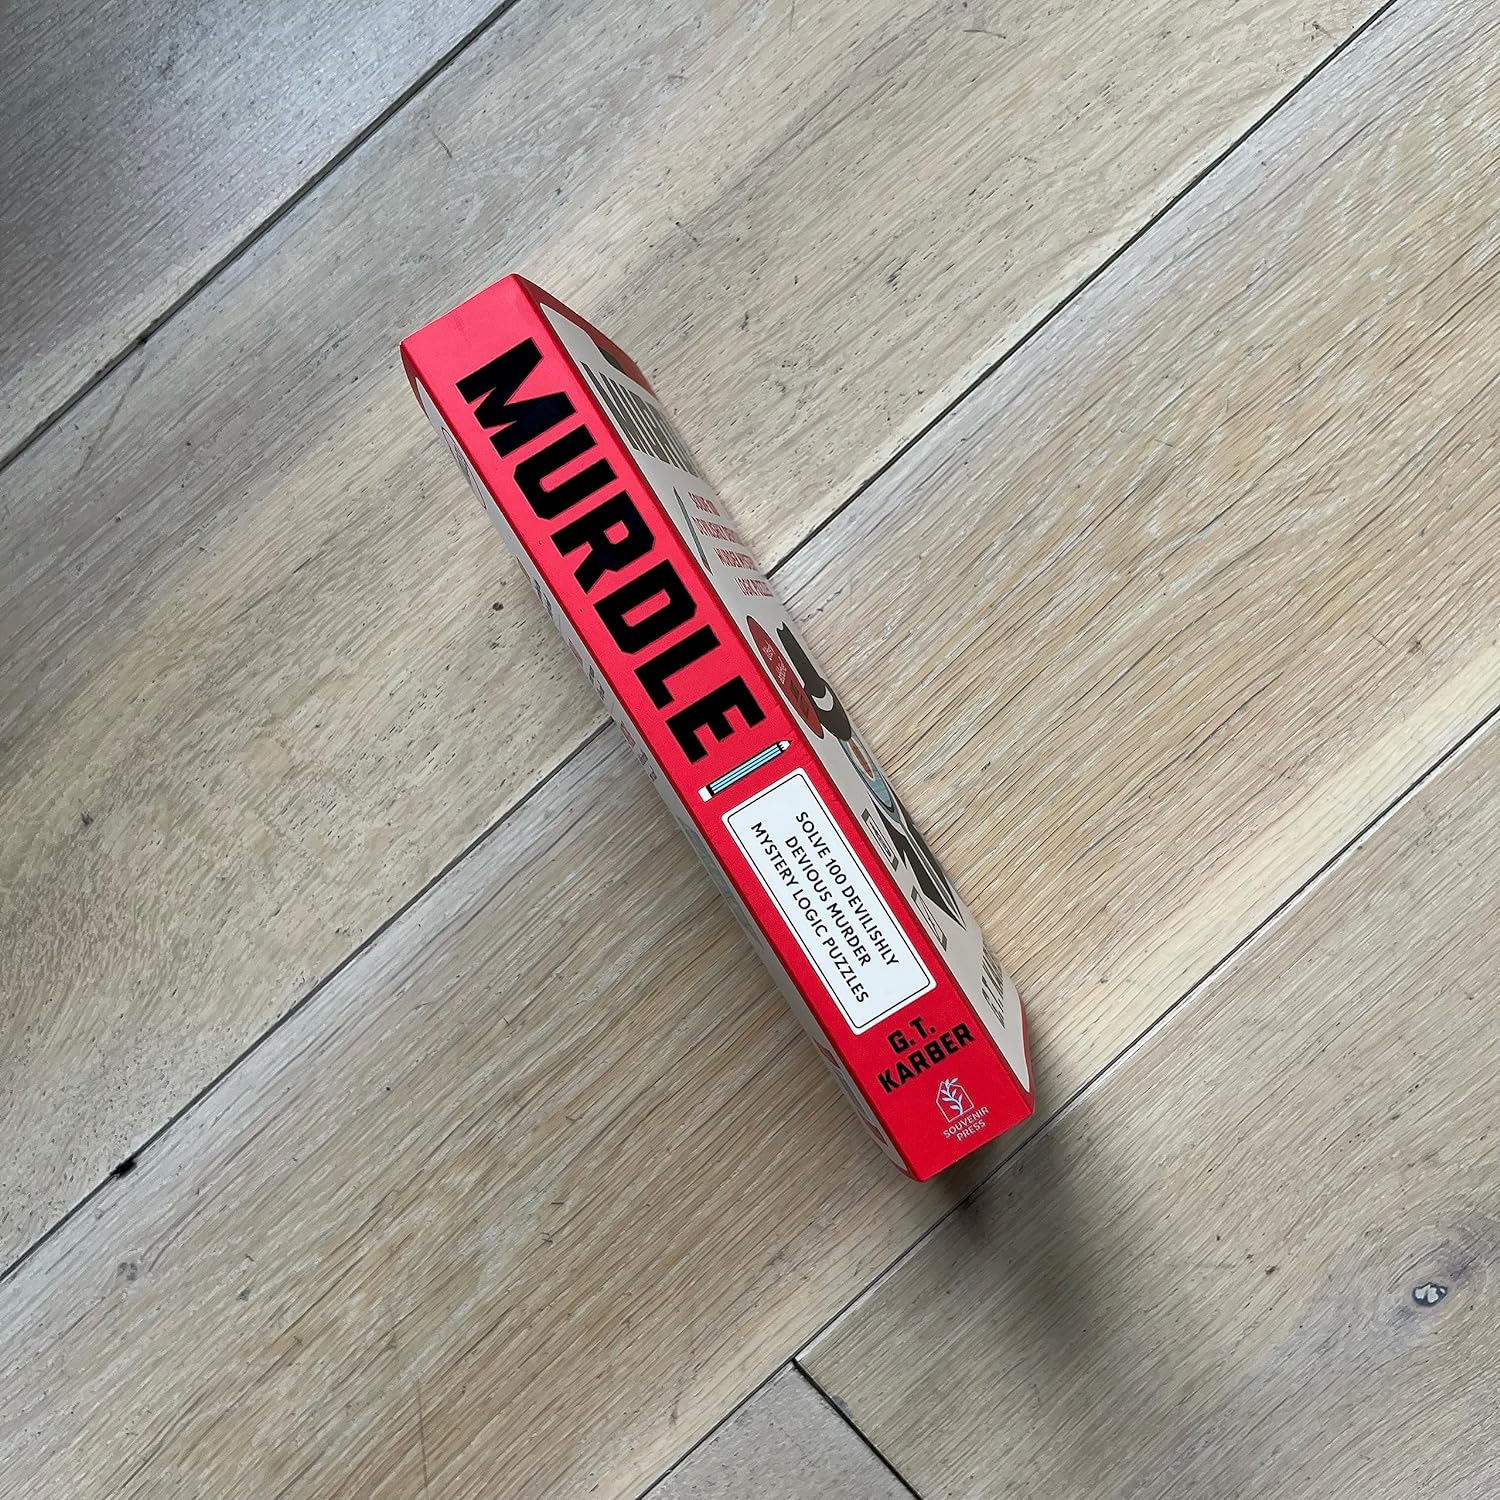 Murdle: Solve 100 Devilishly Devious Murder Mystery Logic Puzzles (Murdle Puzzle Series) - The English Bookshop